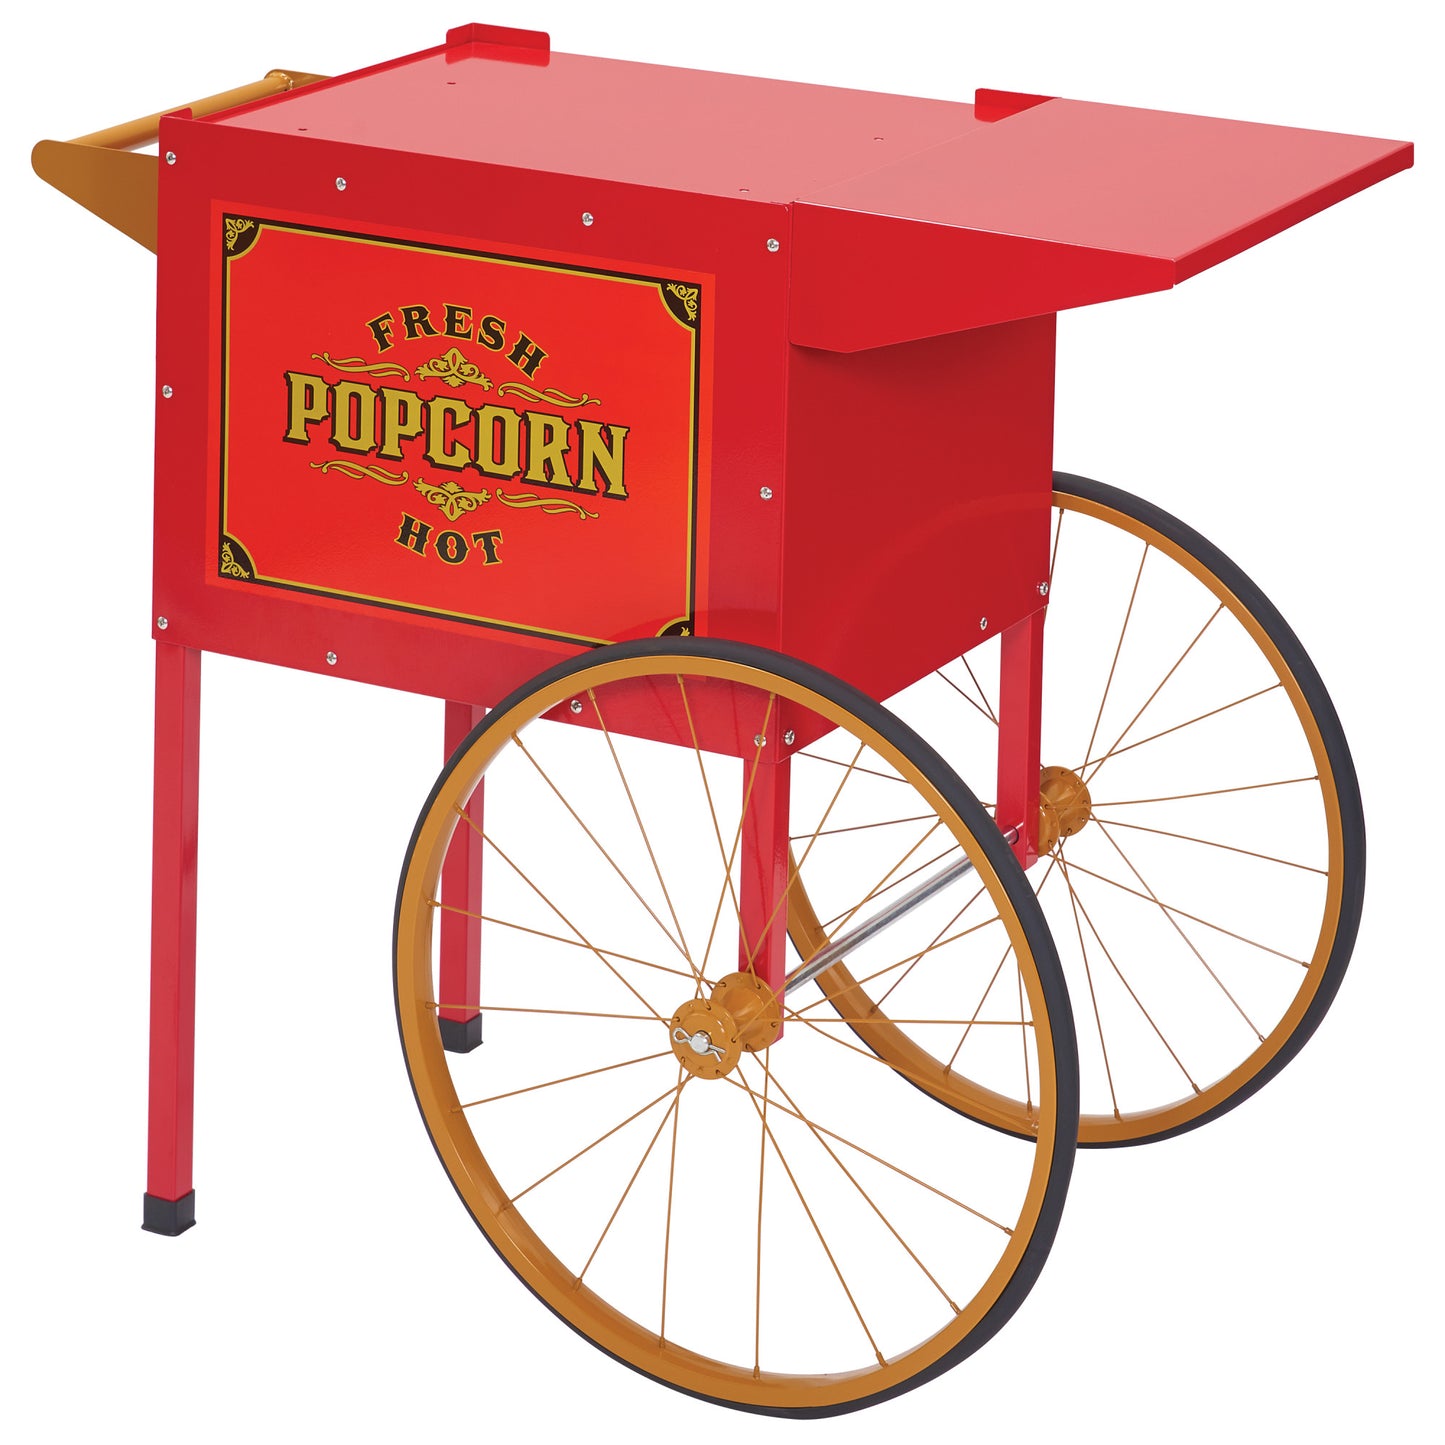 30010 - BenchmarkUSA "Street Vendor" Popcorn Machine Cart